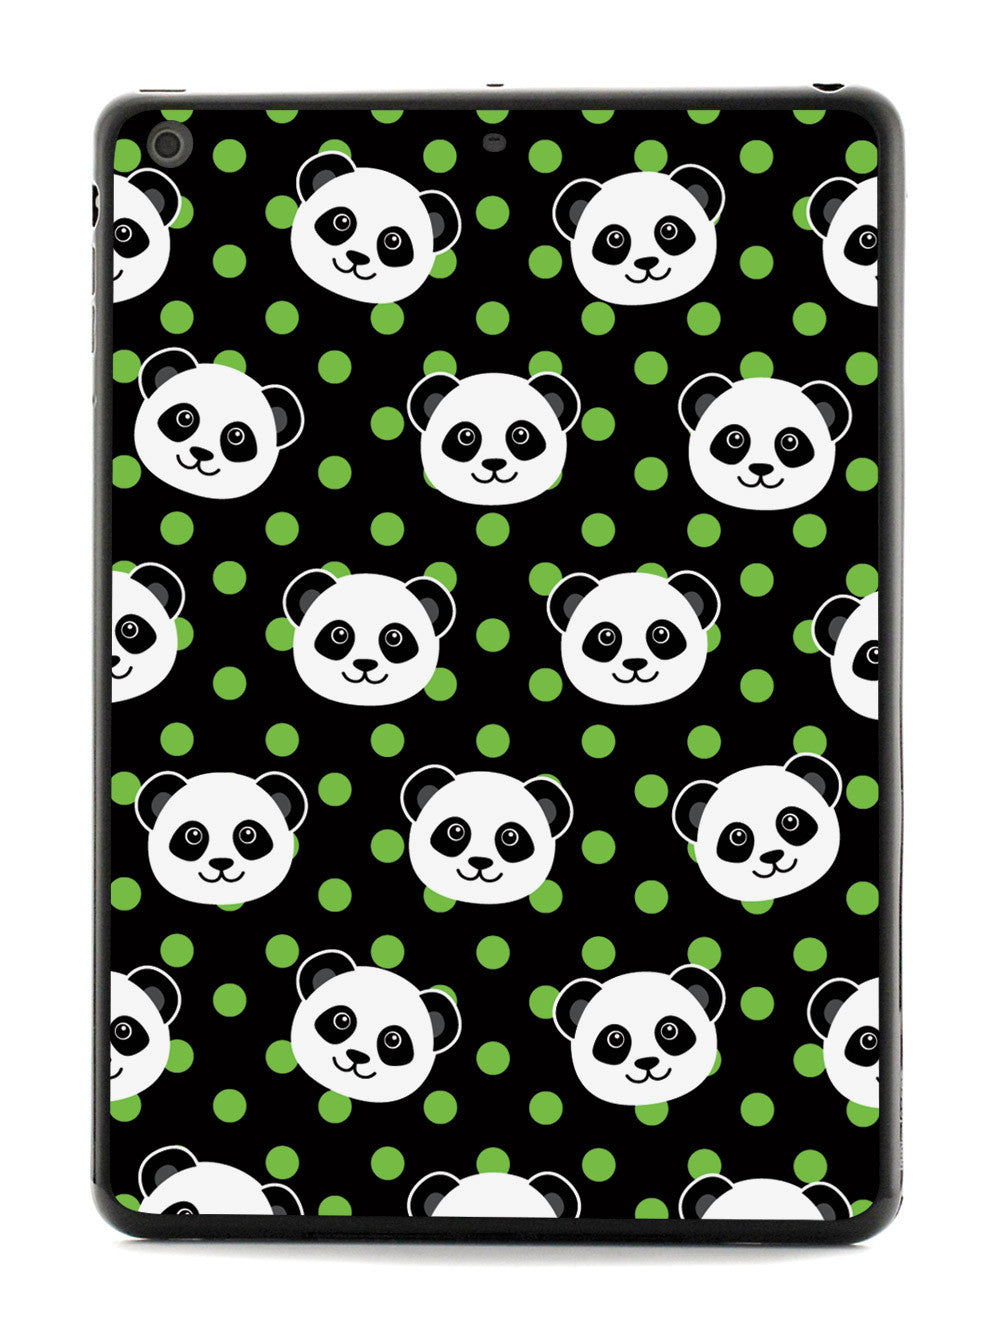 Cute Panda Pattern - Green Polka Dots - Black Case